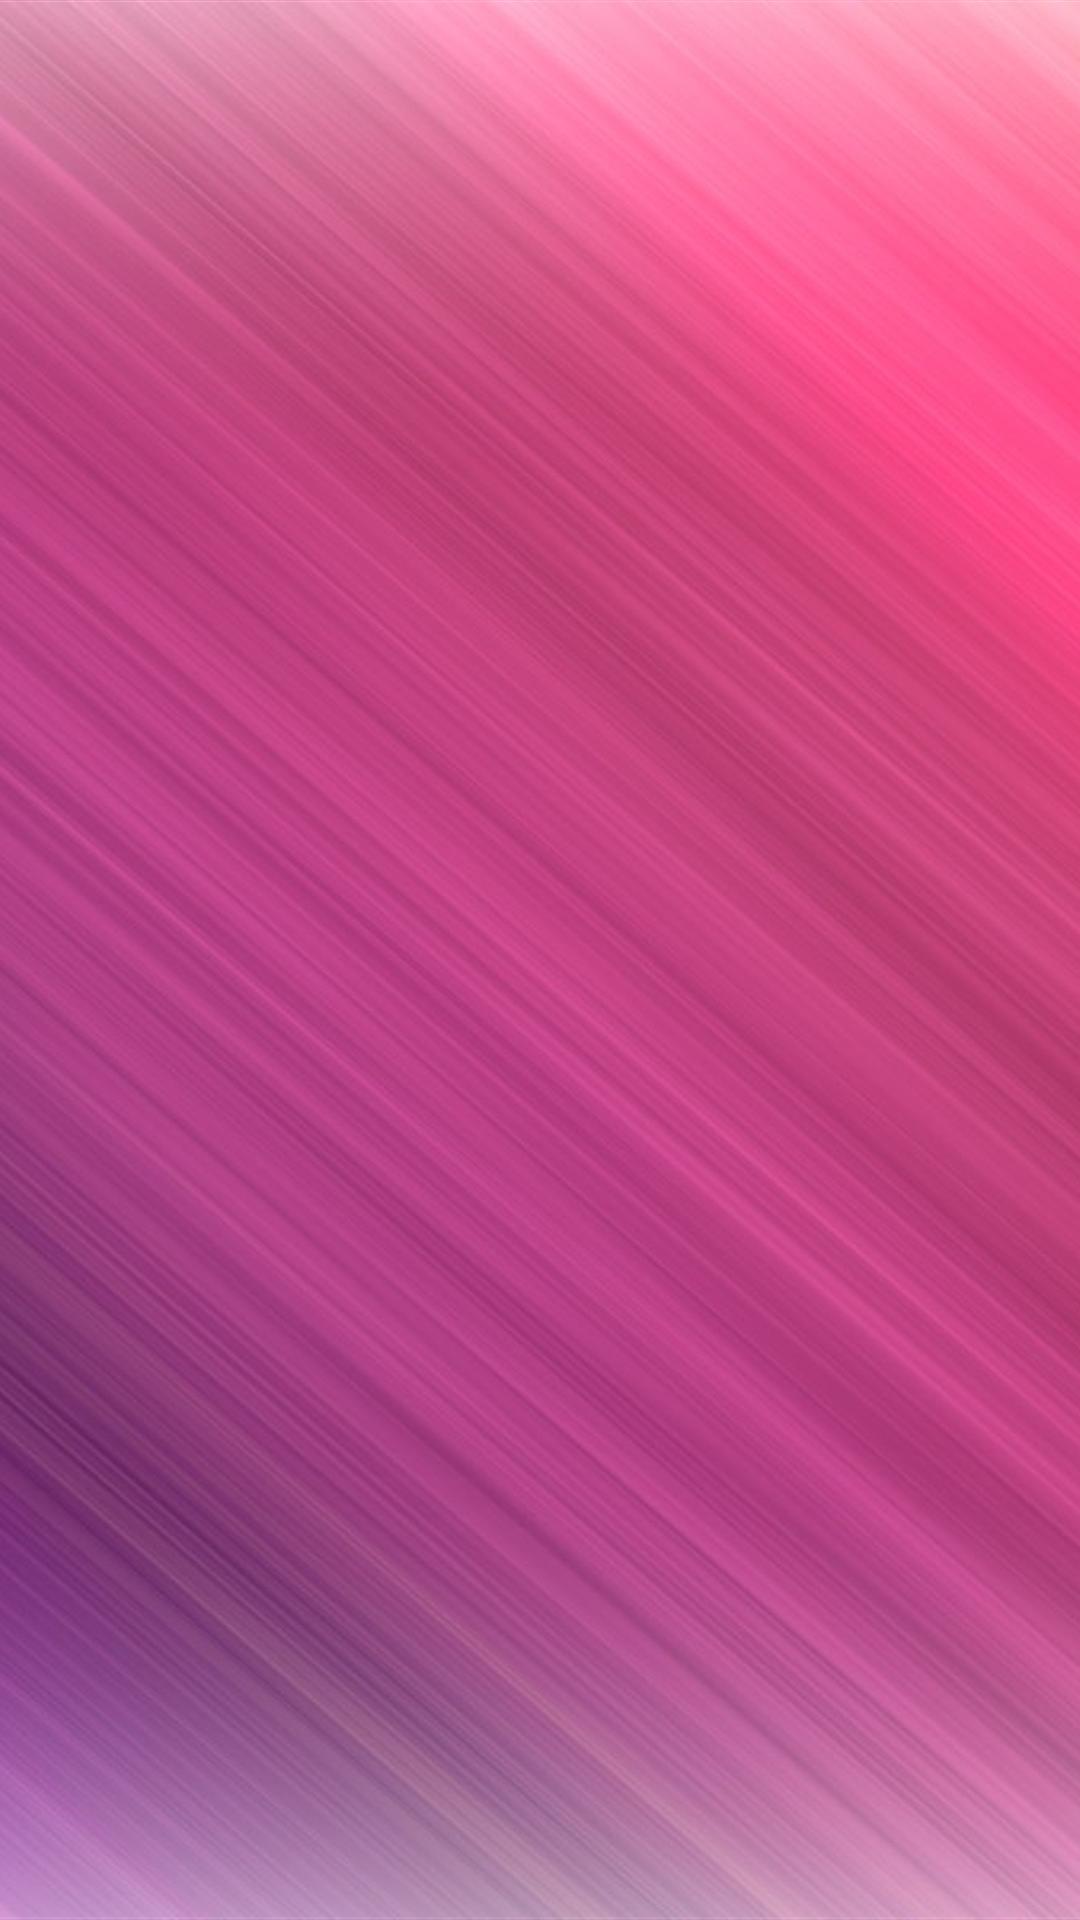 pink iphone wallpaper,pink,violet,purple,red,magenta